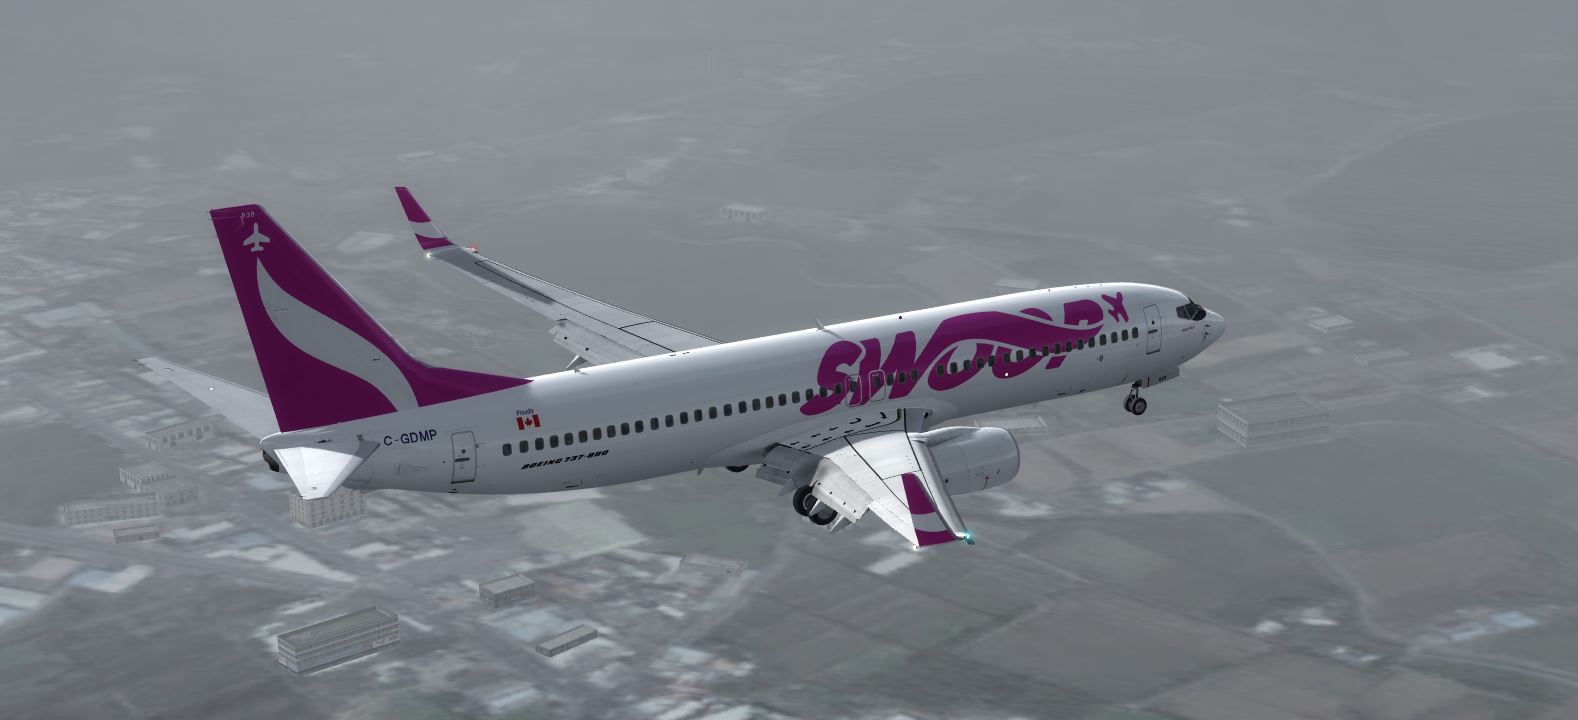 B737-800 Swoop Airlines-4216 